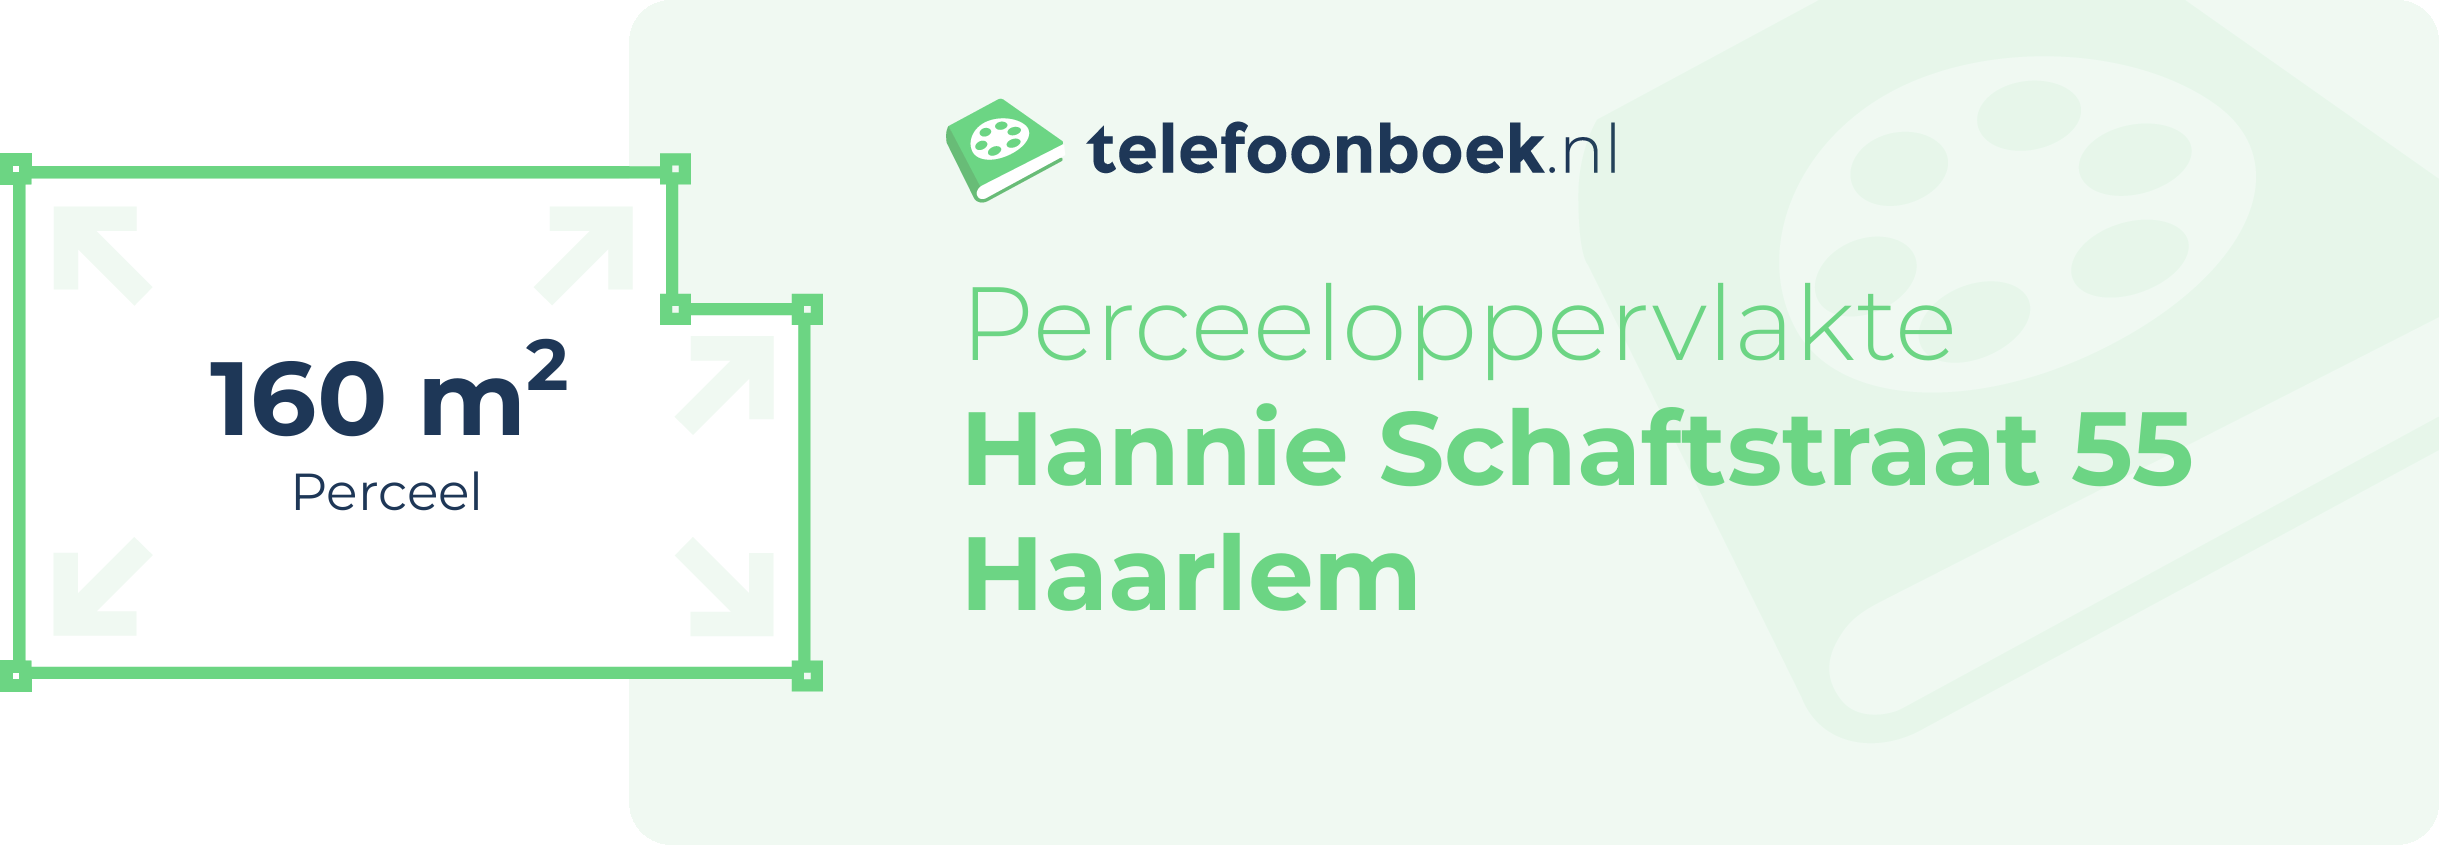 Perceeloppervlakte Hannie Schaftstraat 55 Haarlem